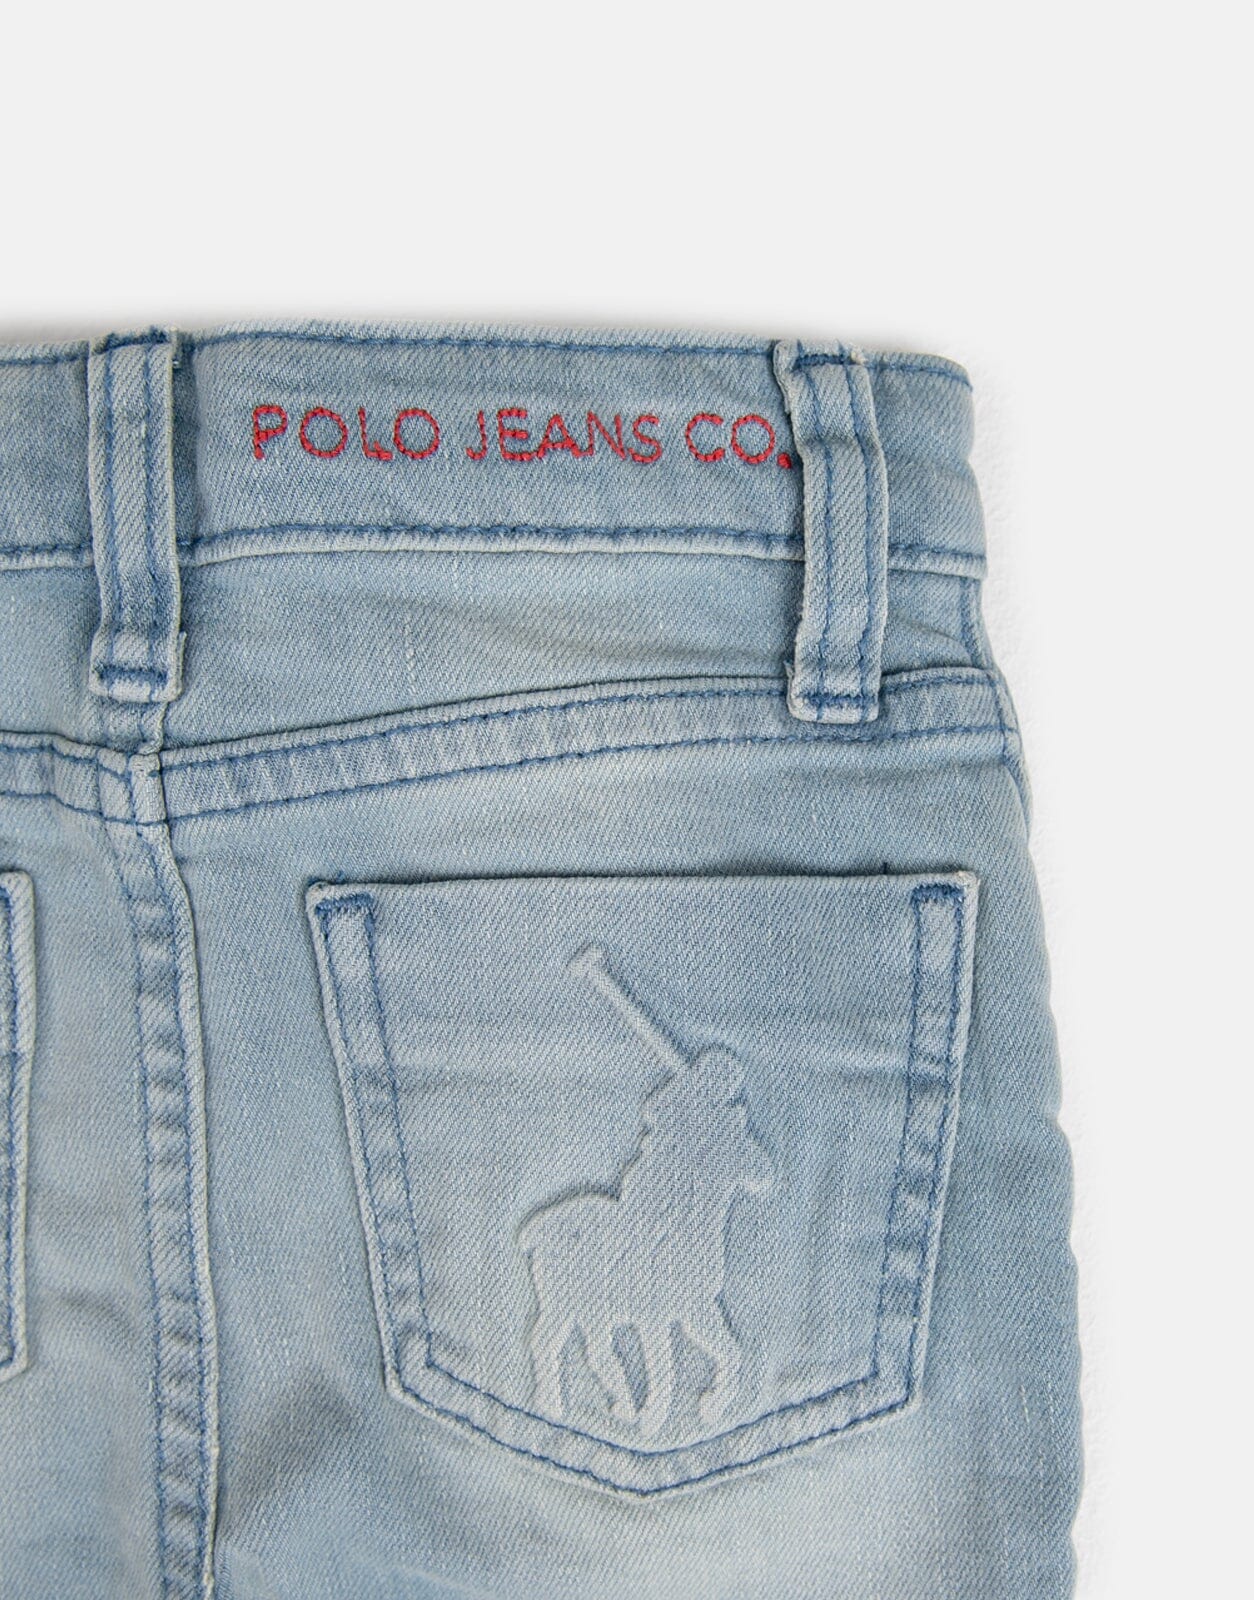 Polo Mila Light Wash Skinny Jeans - Subwear